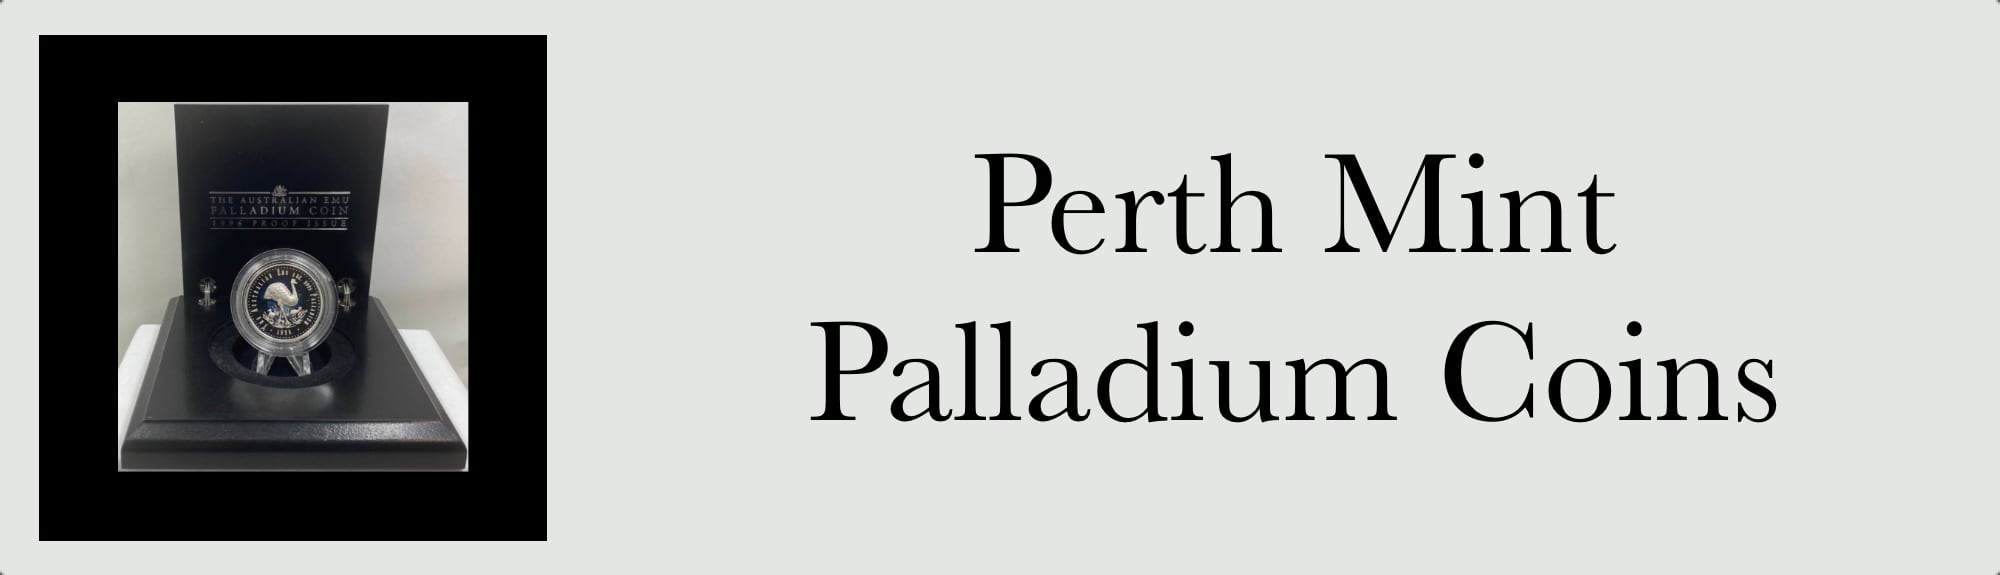 Perth Mint Palladium Coins image